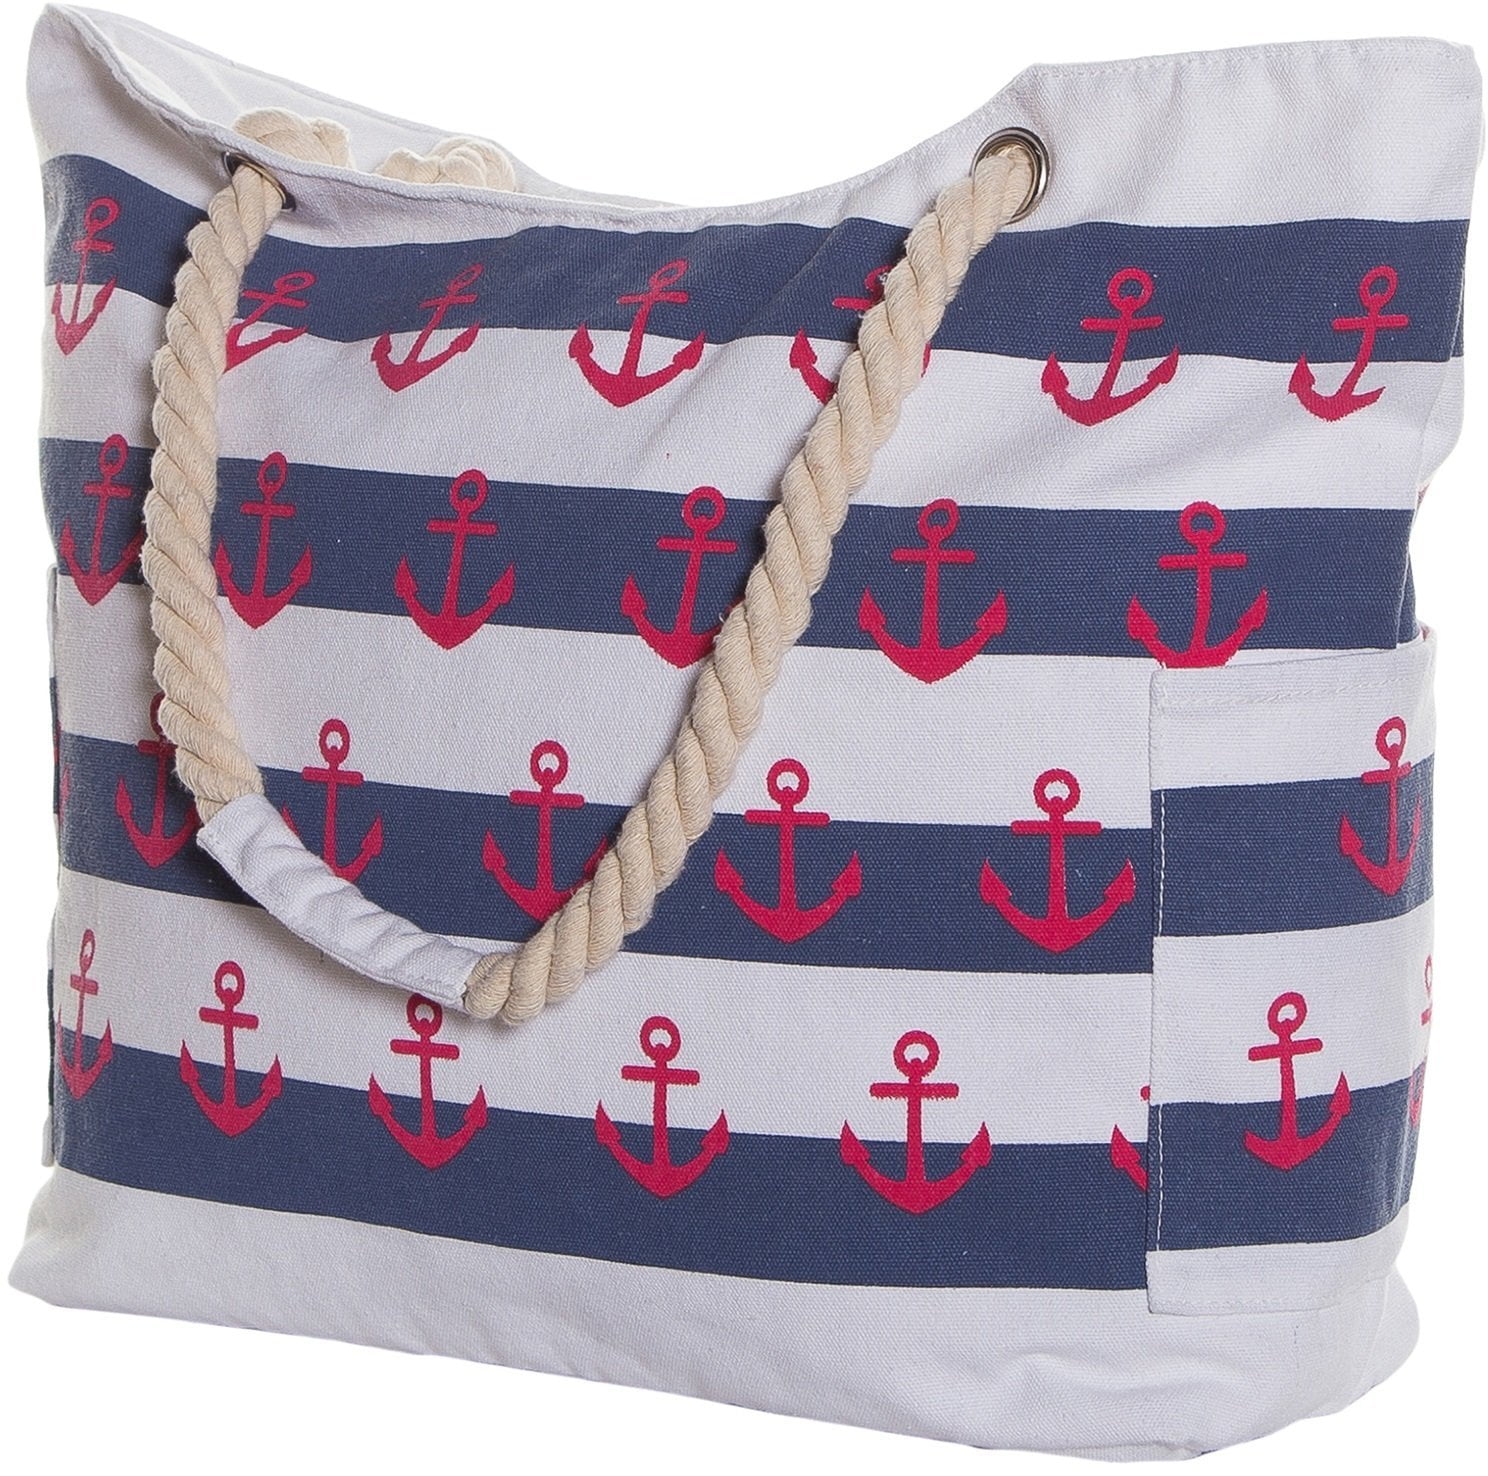 waterproof beach bag with zipper